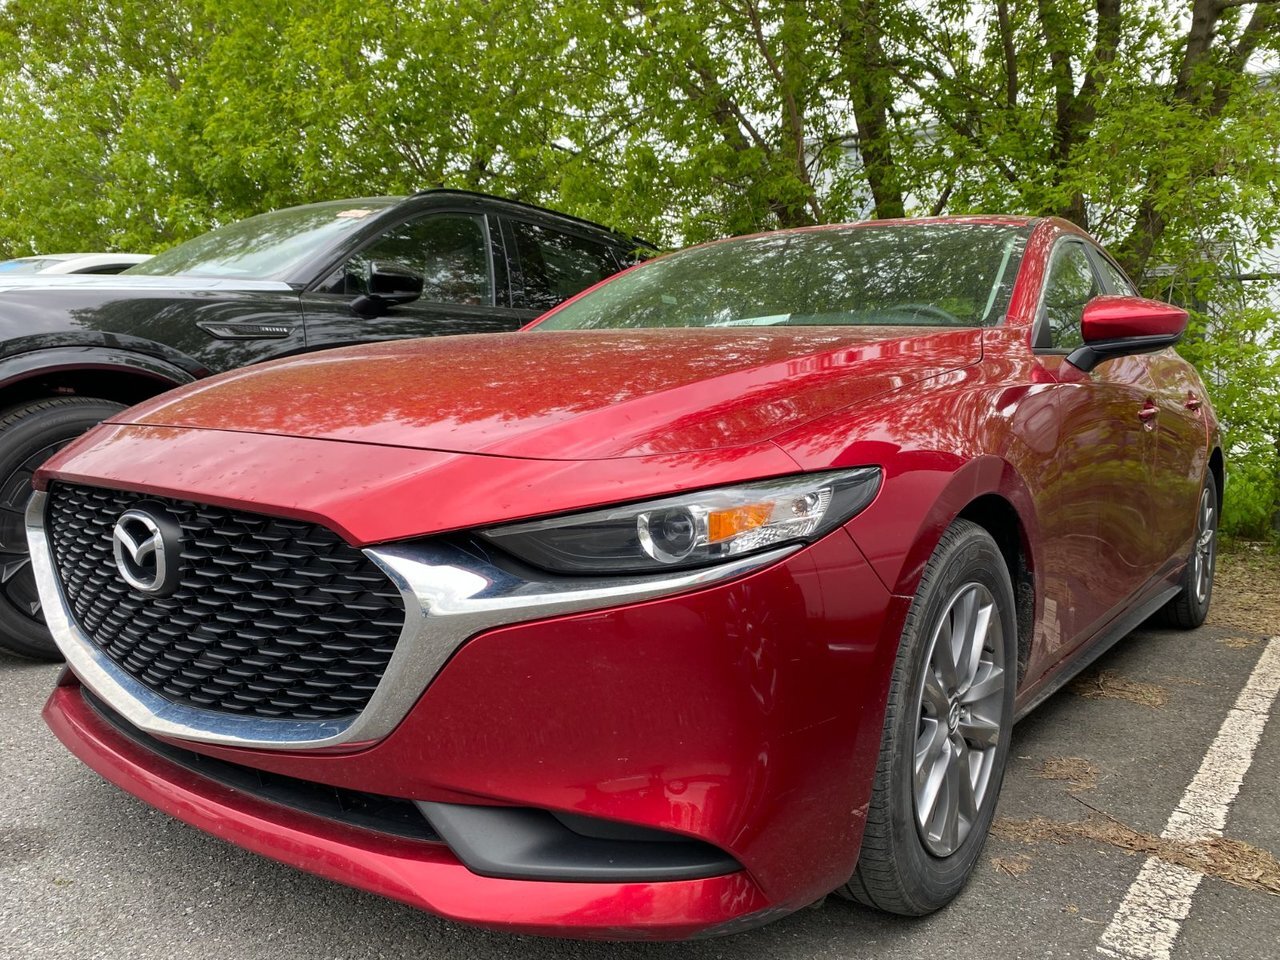 2019 Mazda Mazda3 GX SIEGES CHAUFFANTS CAMERA DE RECUL BLUETOOTH